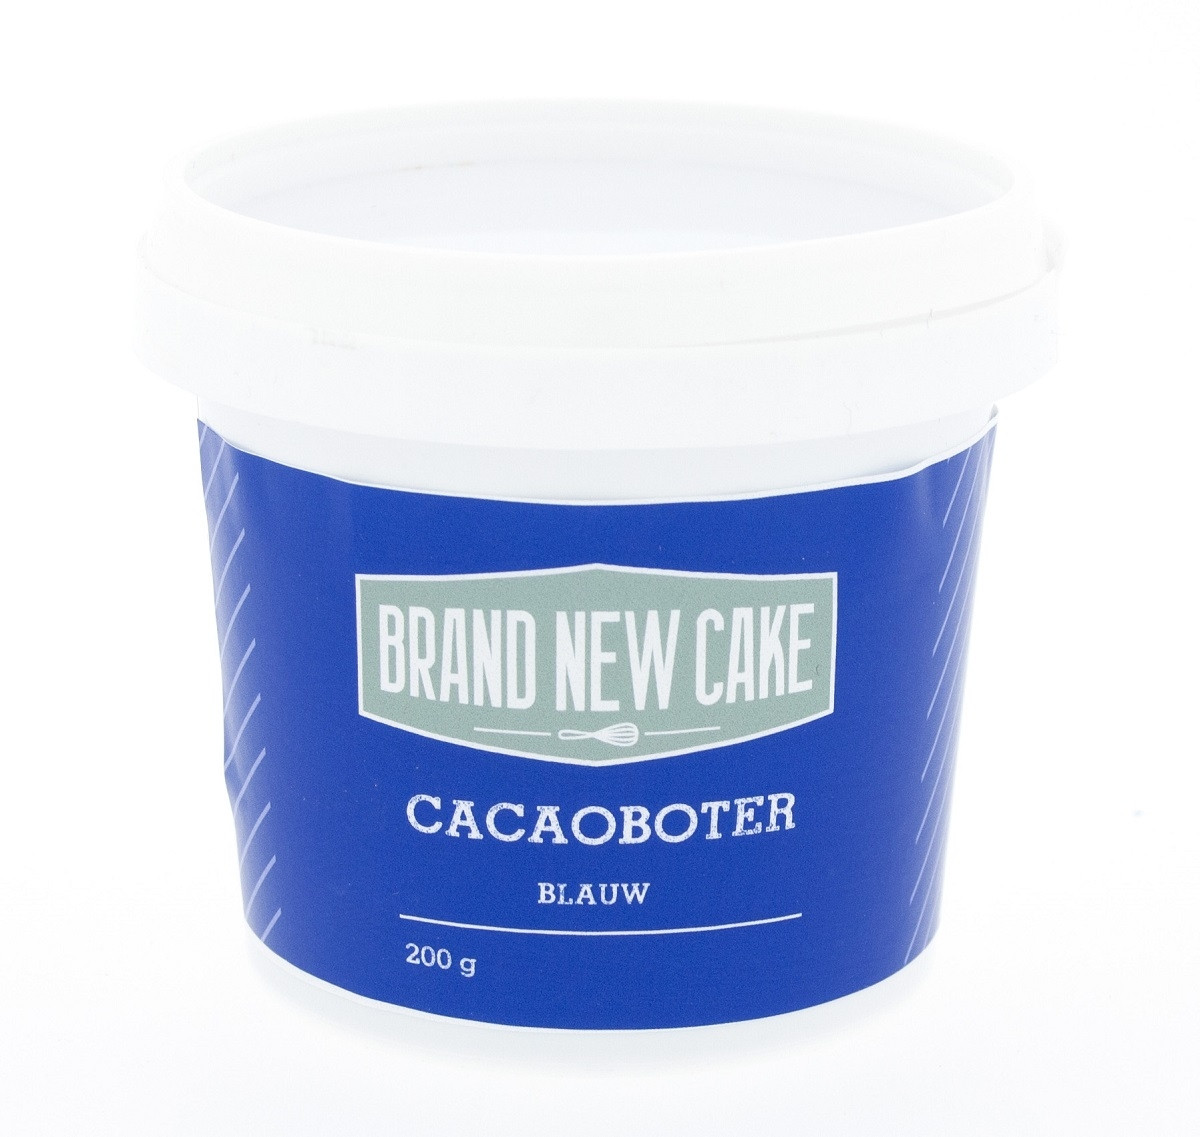 BrandNewCake Cacaoboter gekleurd Blauw 200g